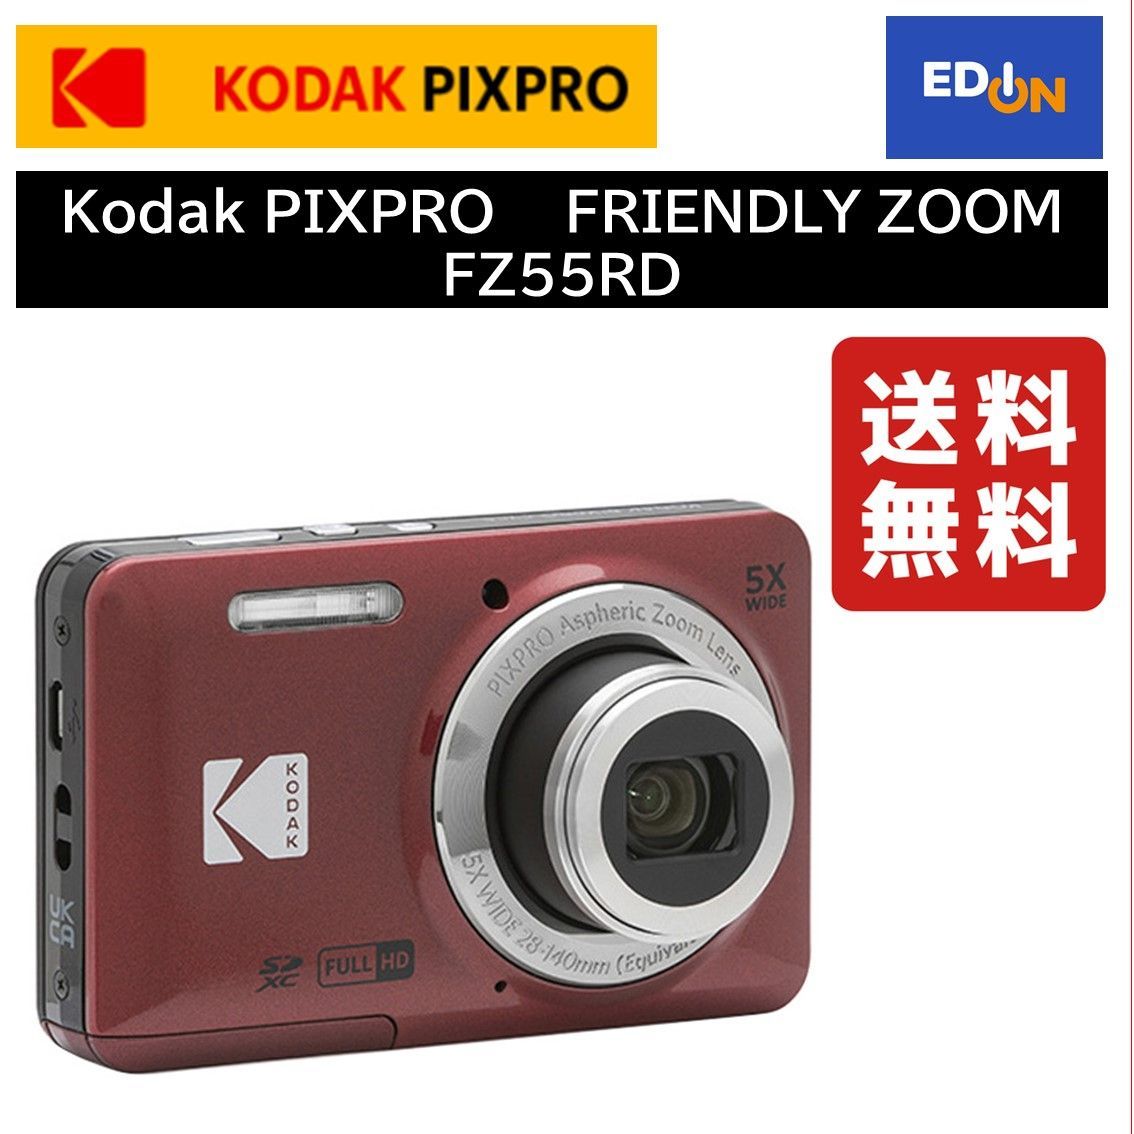 11917】Kodak PIXPRO FRIENDLY ZOOM FZ55RD - メルカリ